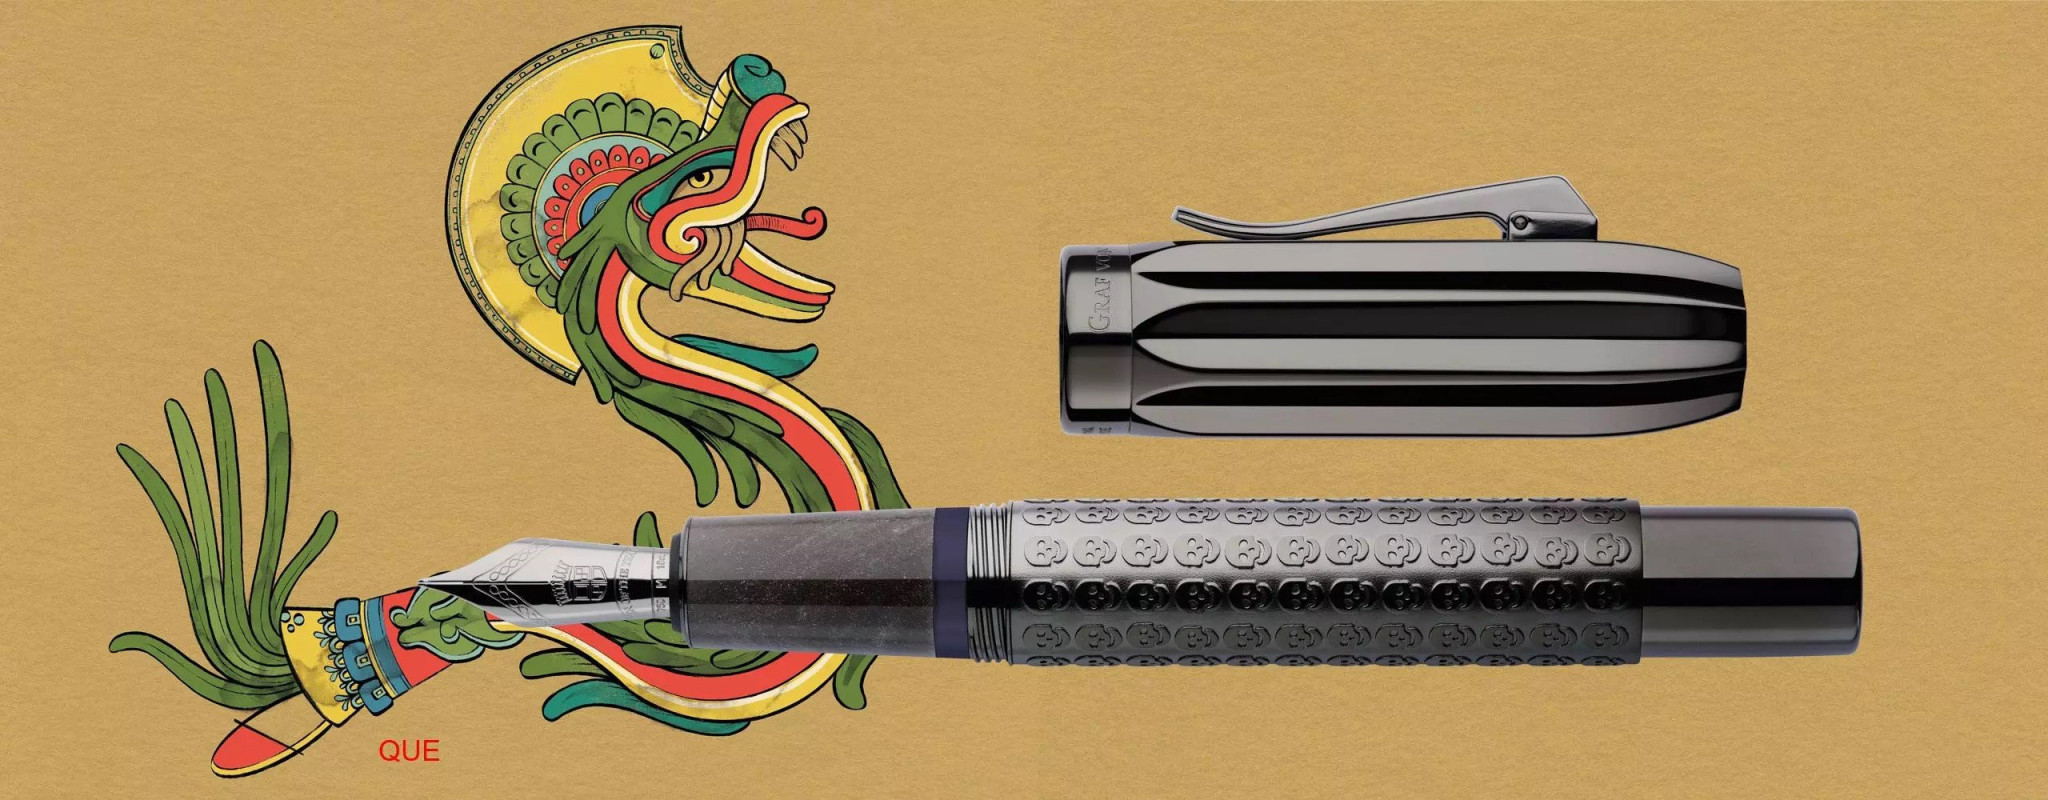 Graf von Faber-Castell Pen of the Year 2022 Aztec Fountain Pen